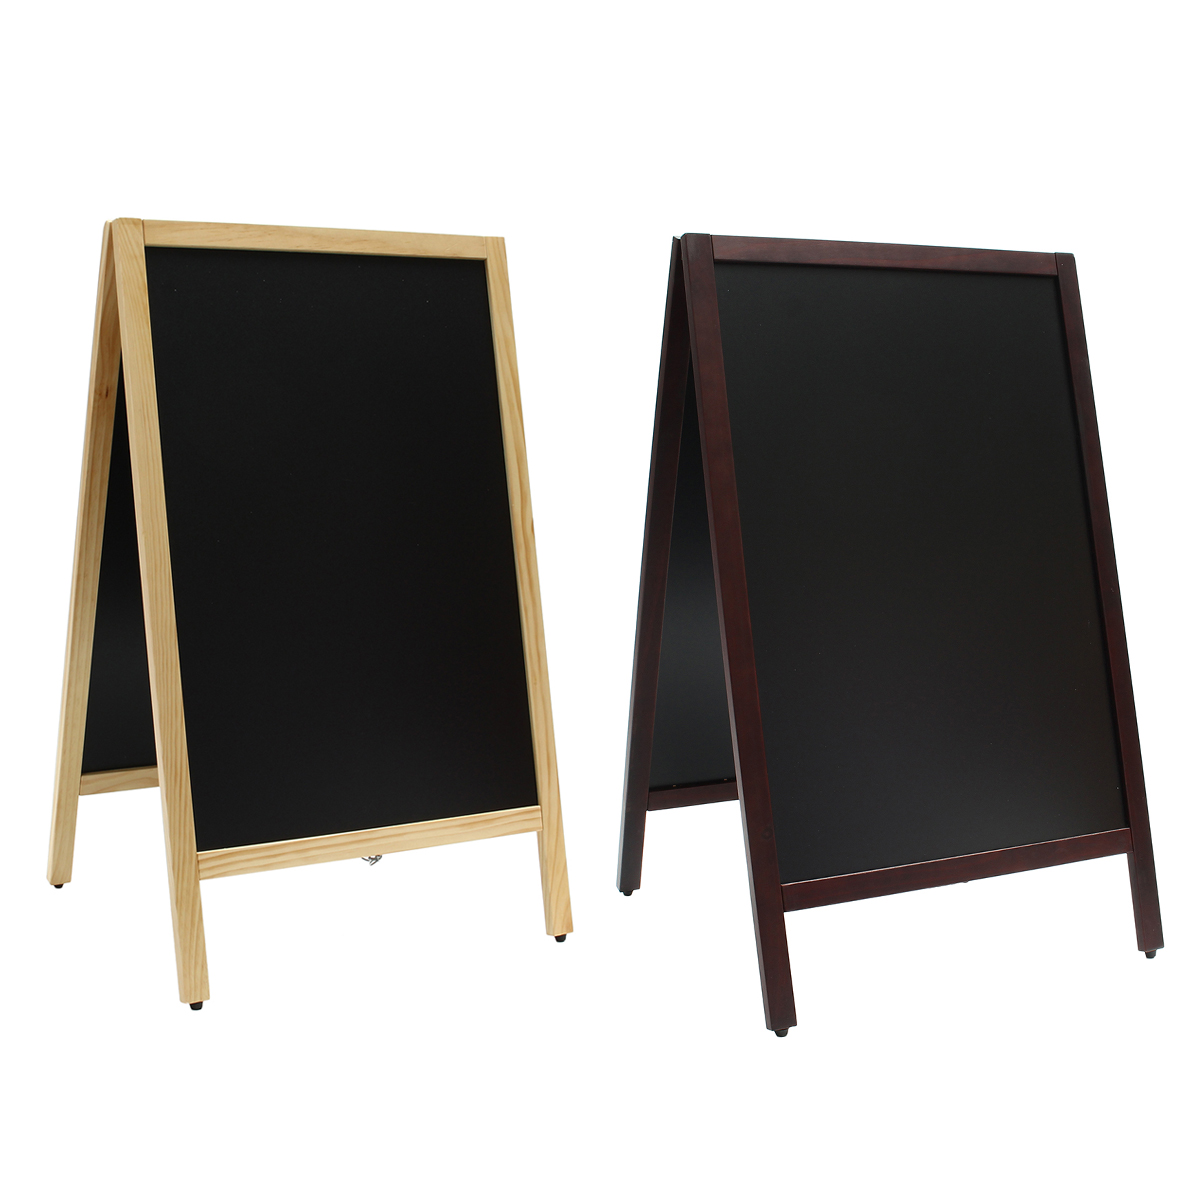 24x39-Inch-Double-sided-Foldable-Pinewood-Frame-Chalkboard-Wedding-Shop-Sign-Memo-Message-Menu-Board-1267623-1